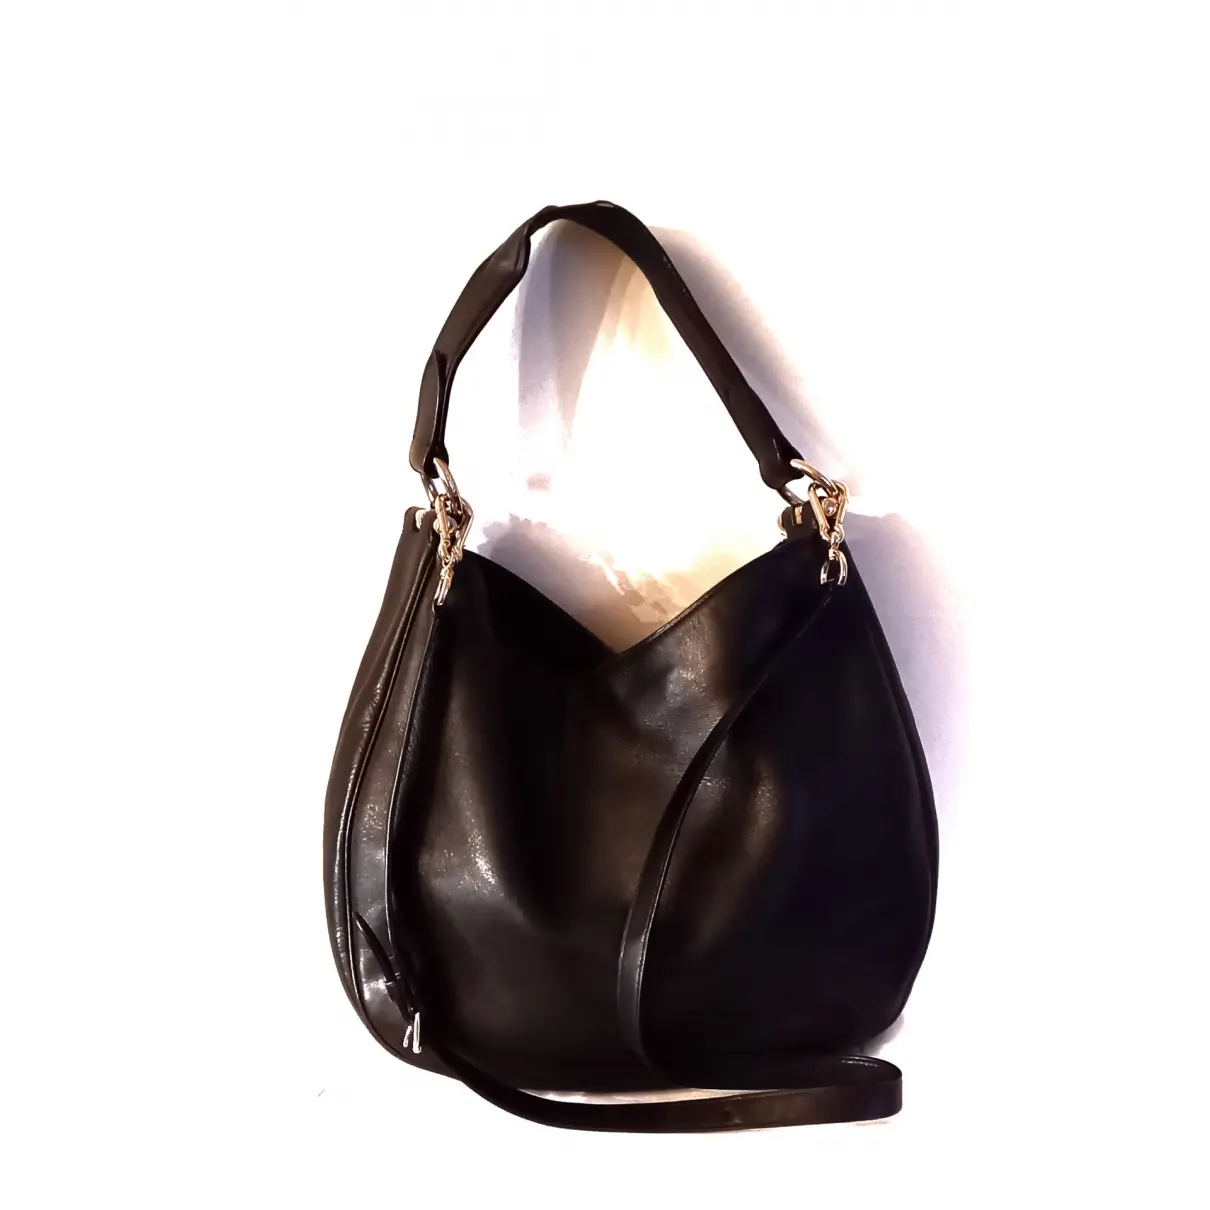 Buy Coach Large Scout Hobo leather handbag online